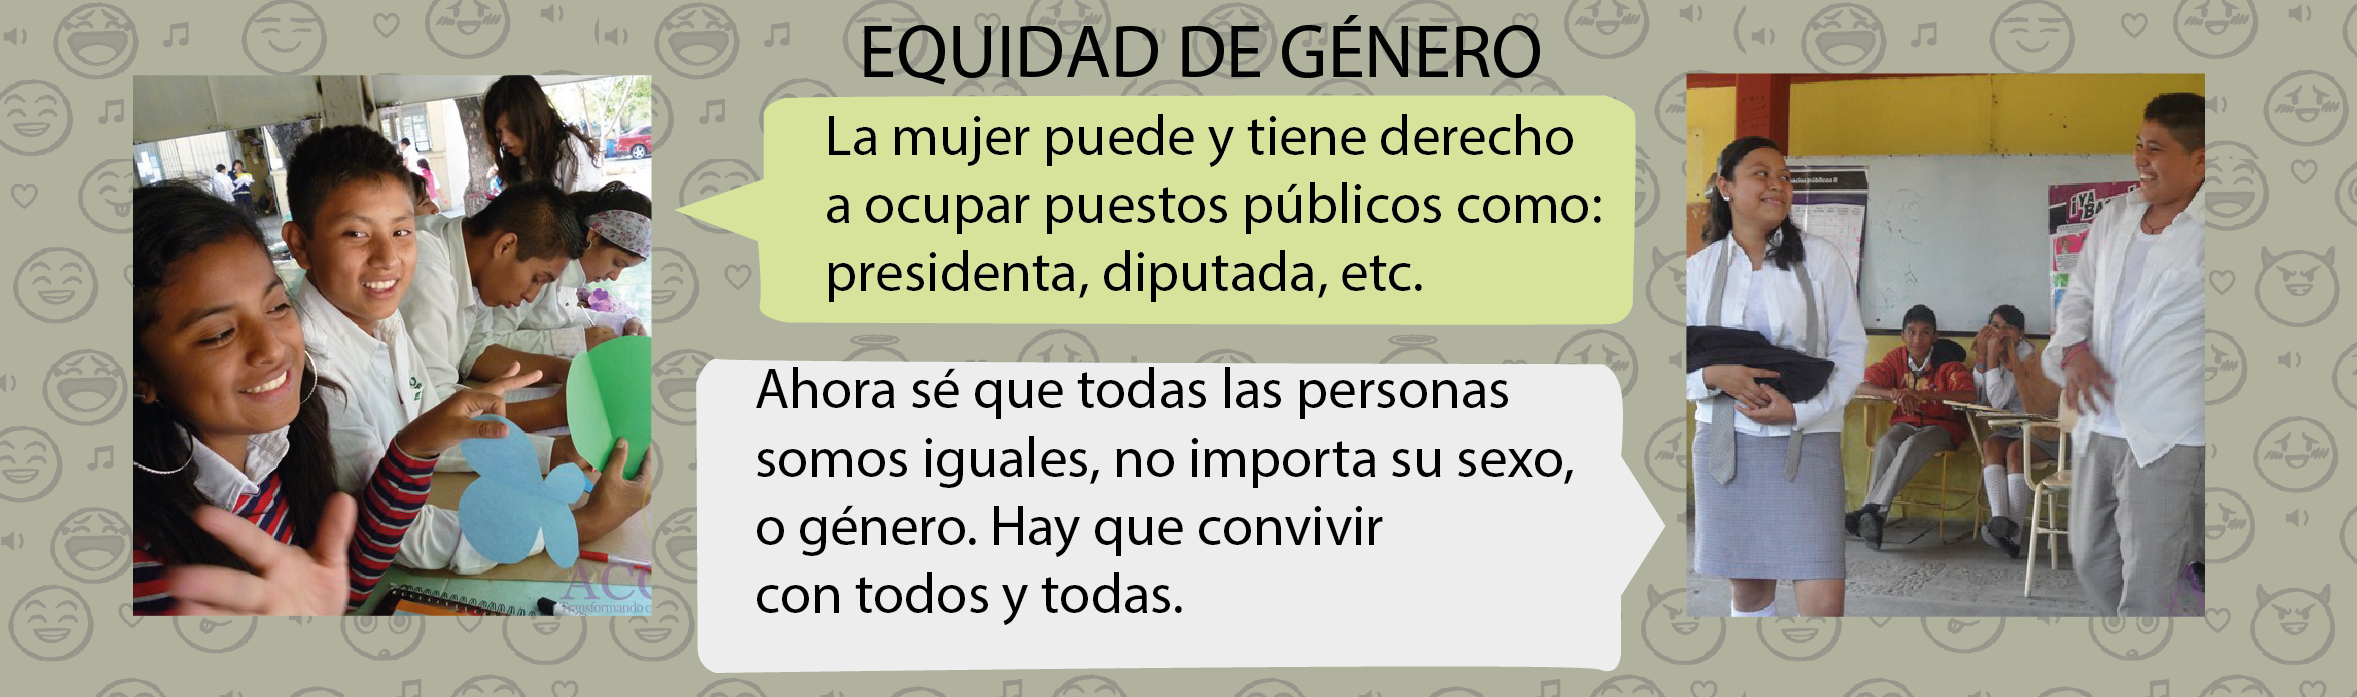 Equidad2.png